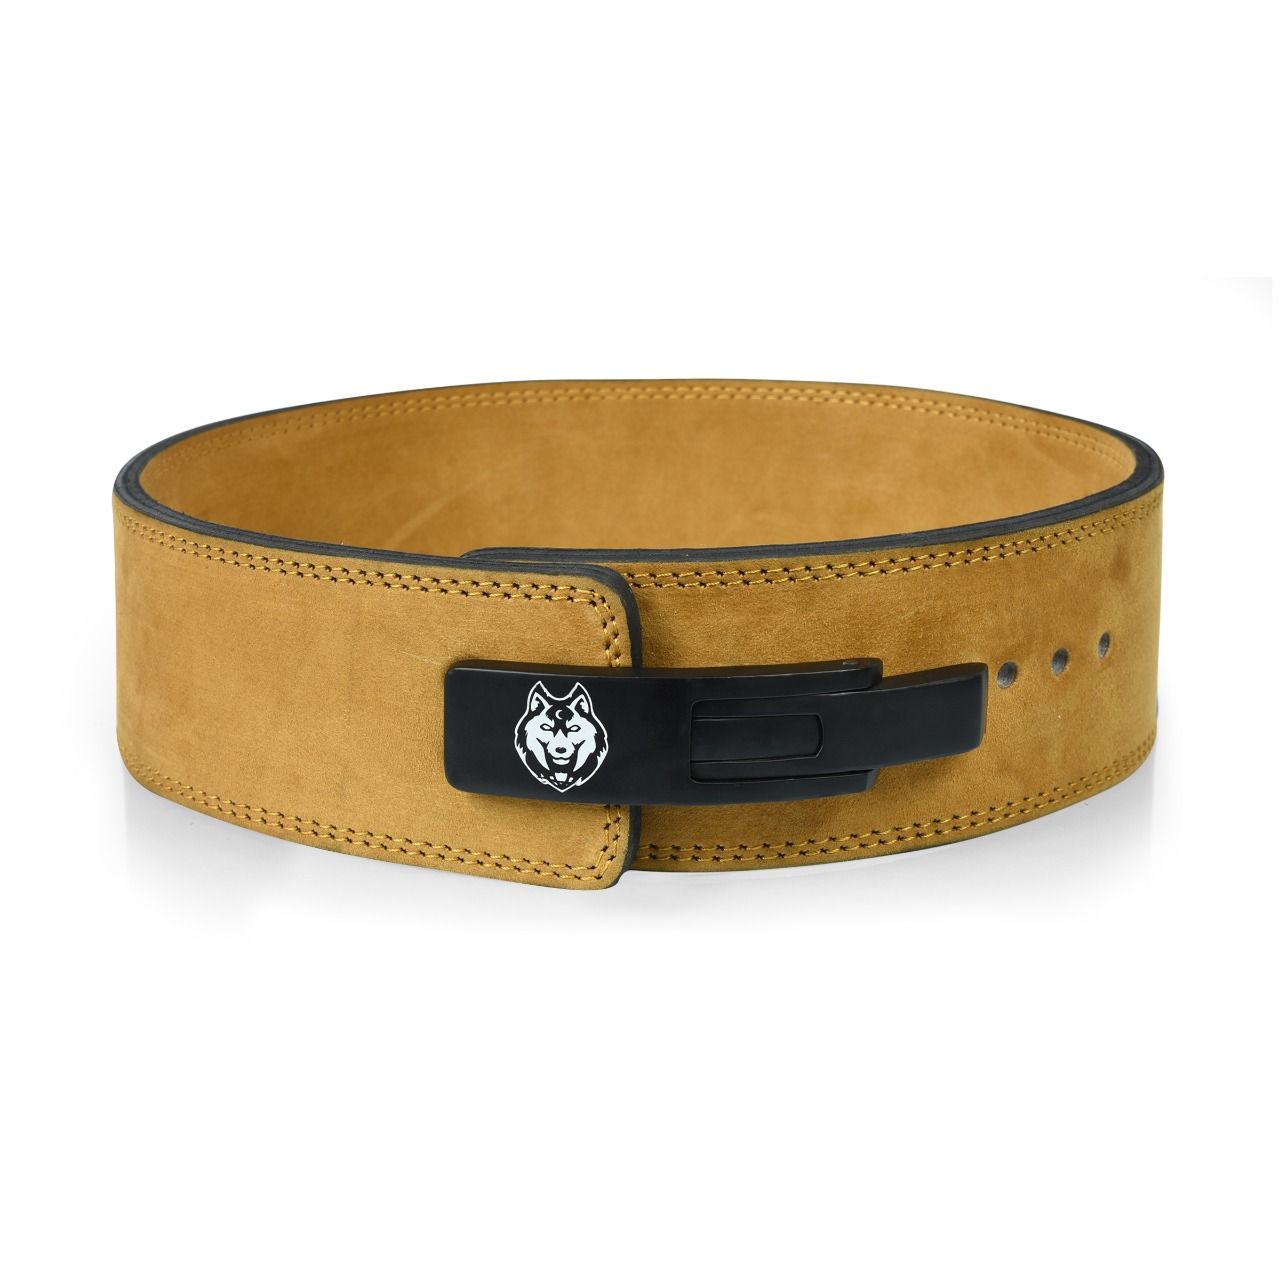 10 mm Suede Leather Lever Belt (Skin)